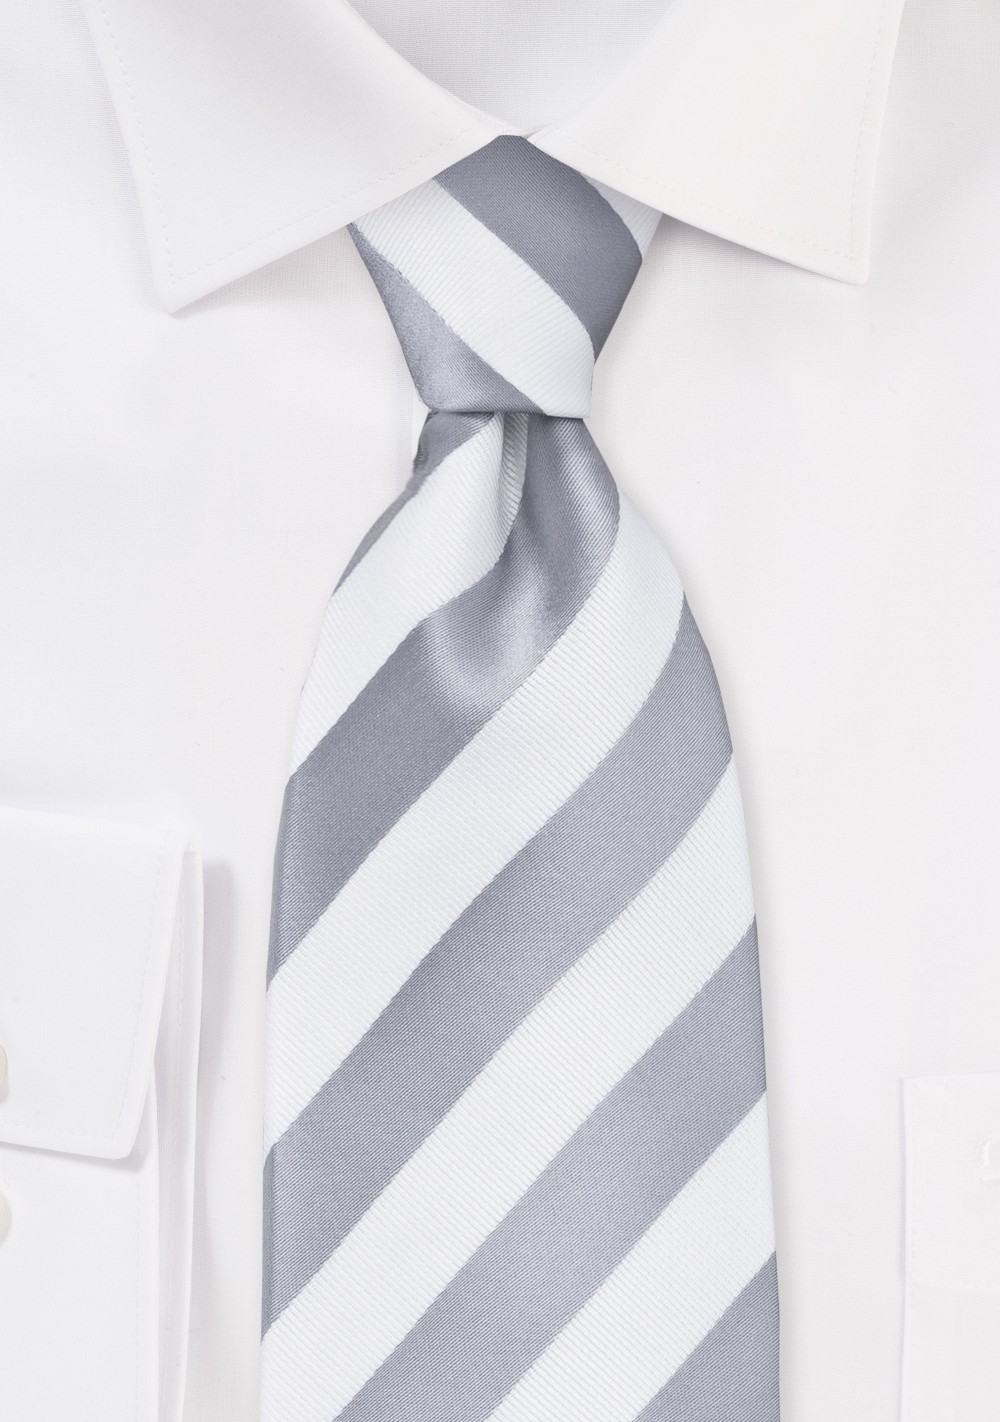 White and Silver Striped Tie